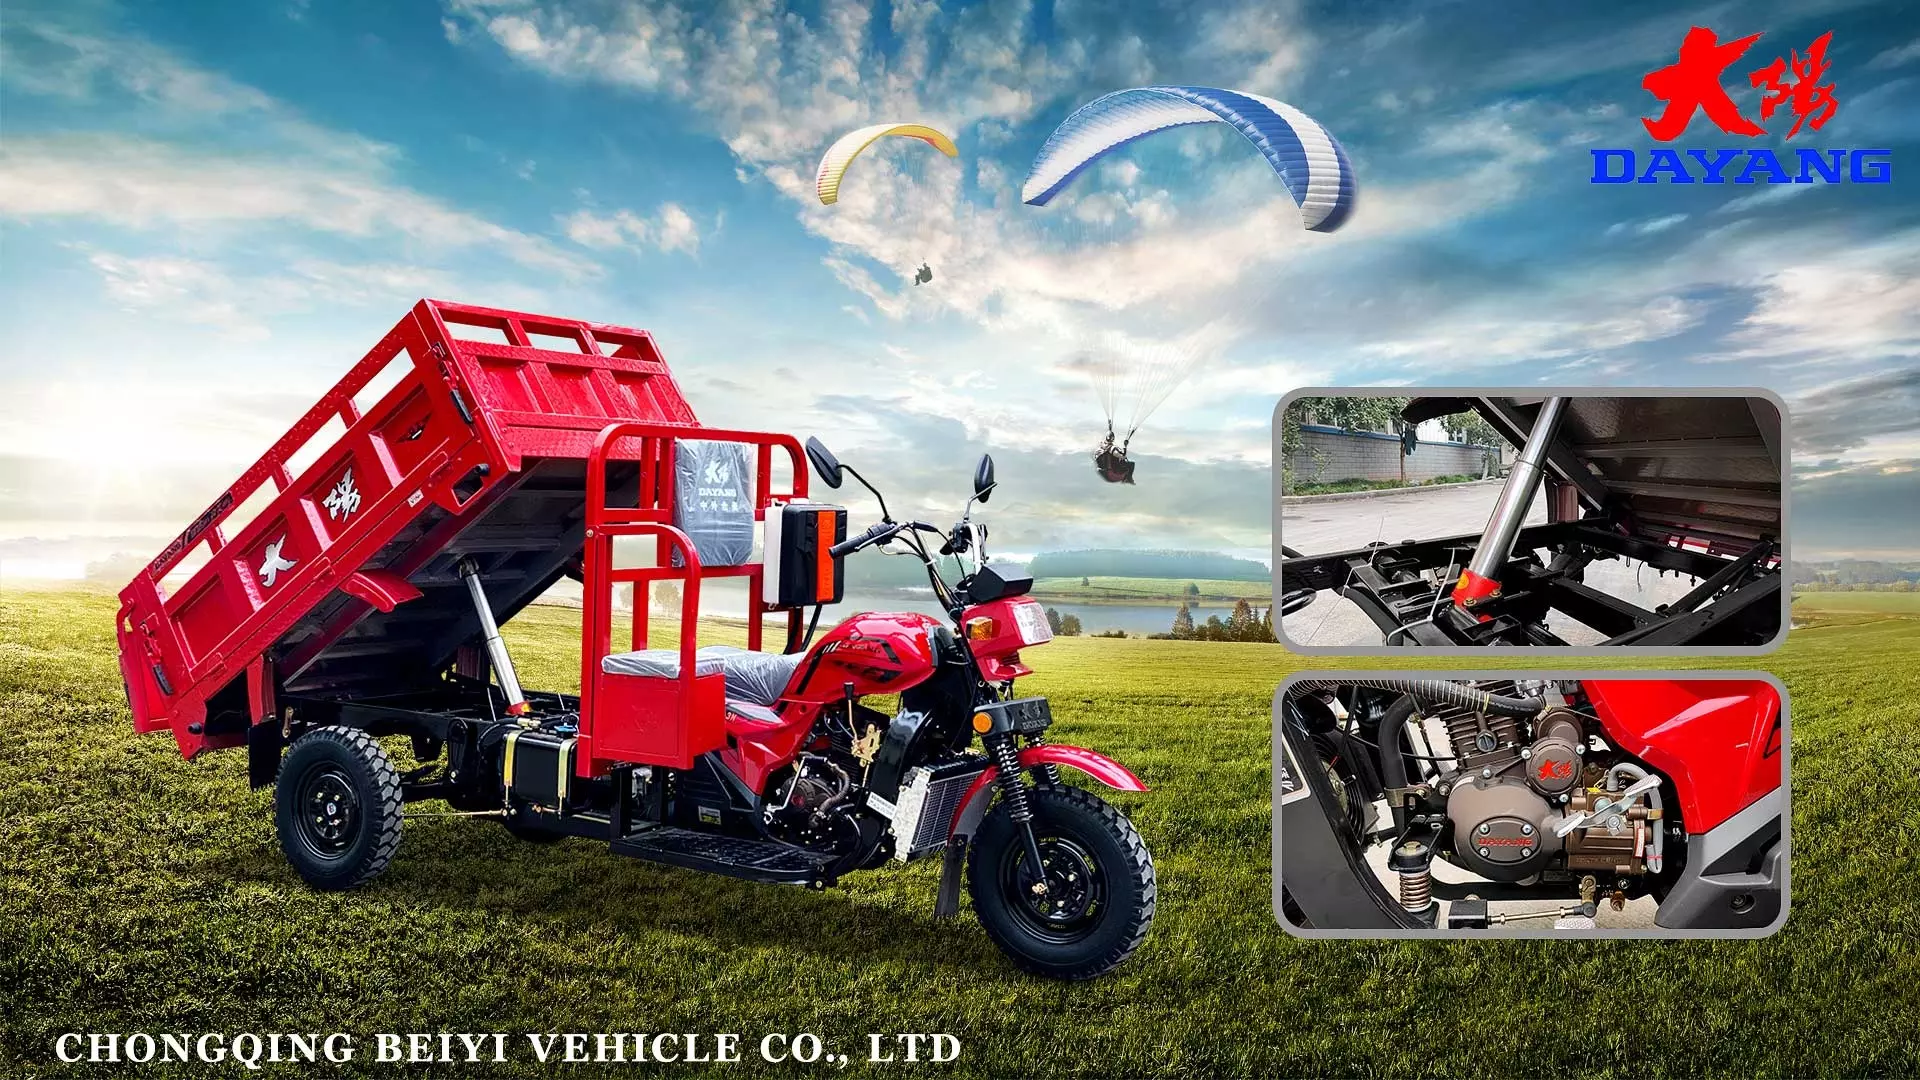 China Manufacture lowest price cheap for sale e trike Cargo Motorcycle tuk tu ktrimoto carga cargo cargo tricycle